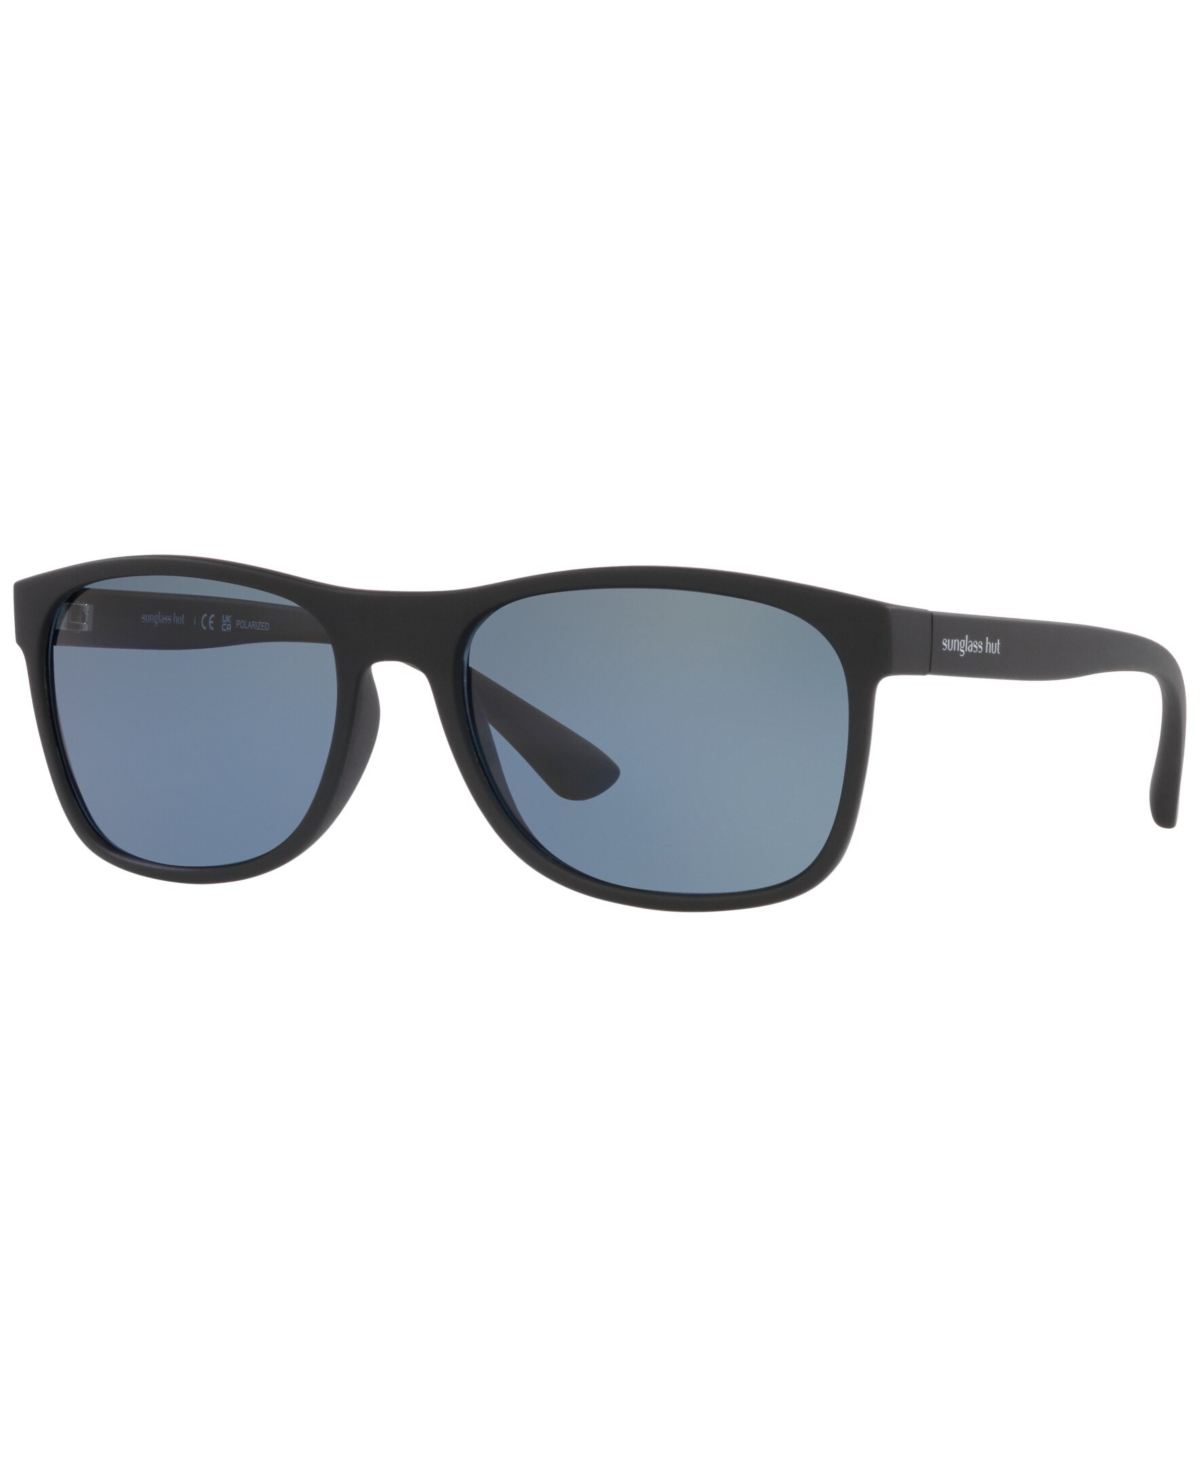 Men's Polarized Sunglasses, HU202058-p - Matte Blue